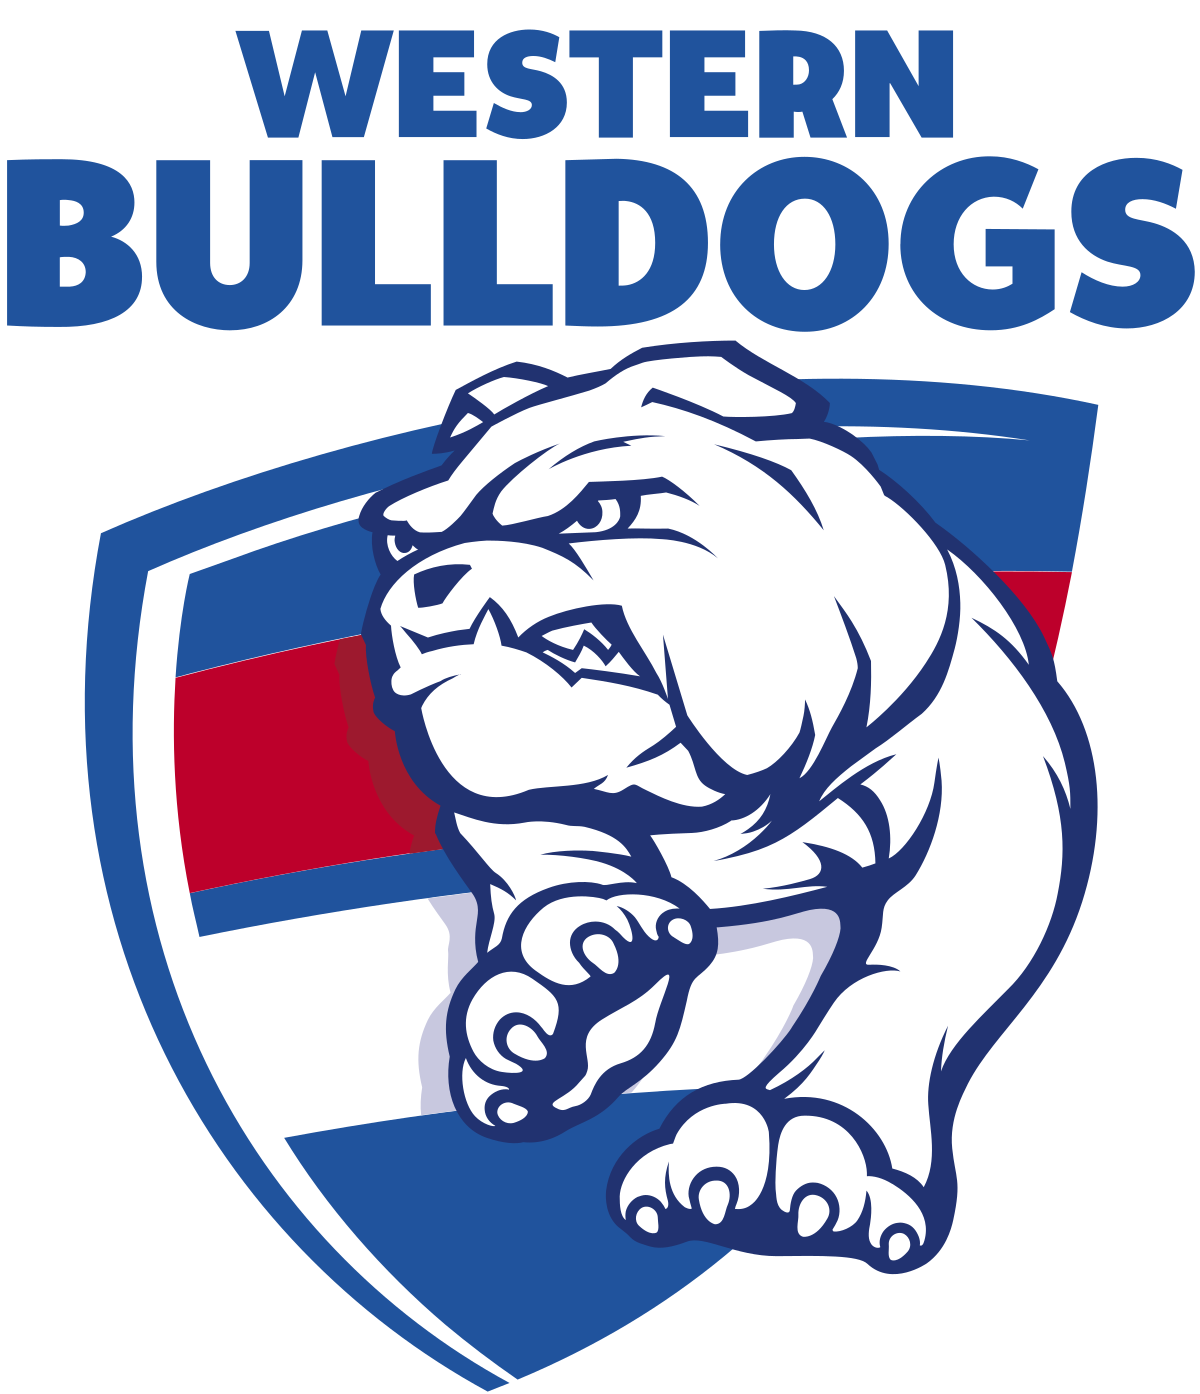 Bulldogs Symbol. Western bulldogs .com